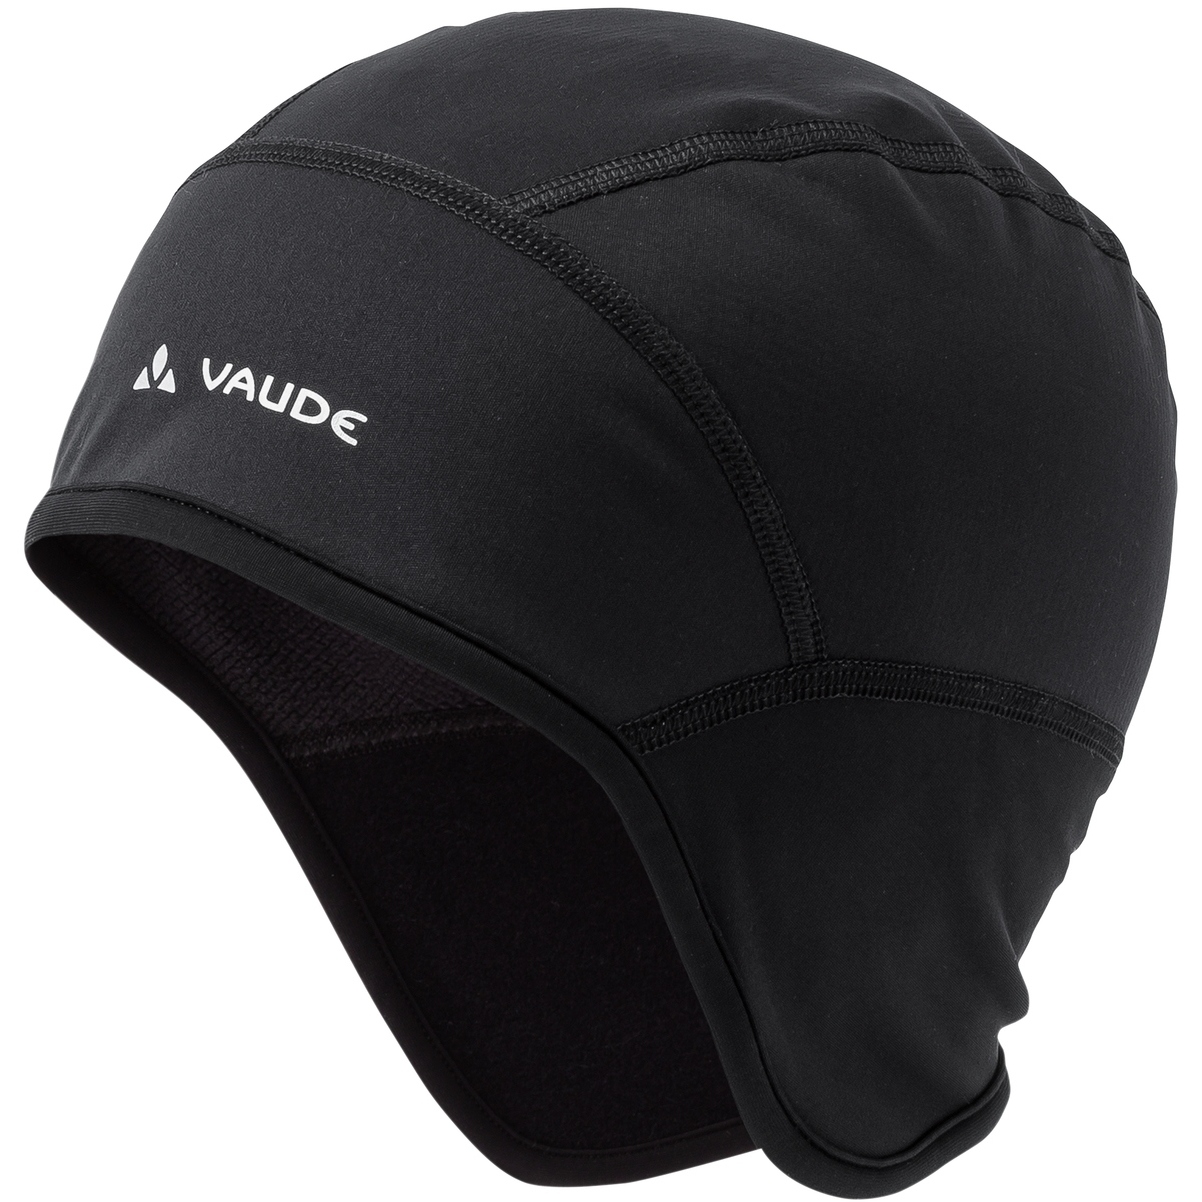 Produktbild von Vaude Bike Windproof Cap III Unterhelm - schwarz uni